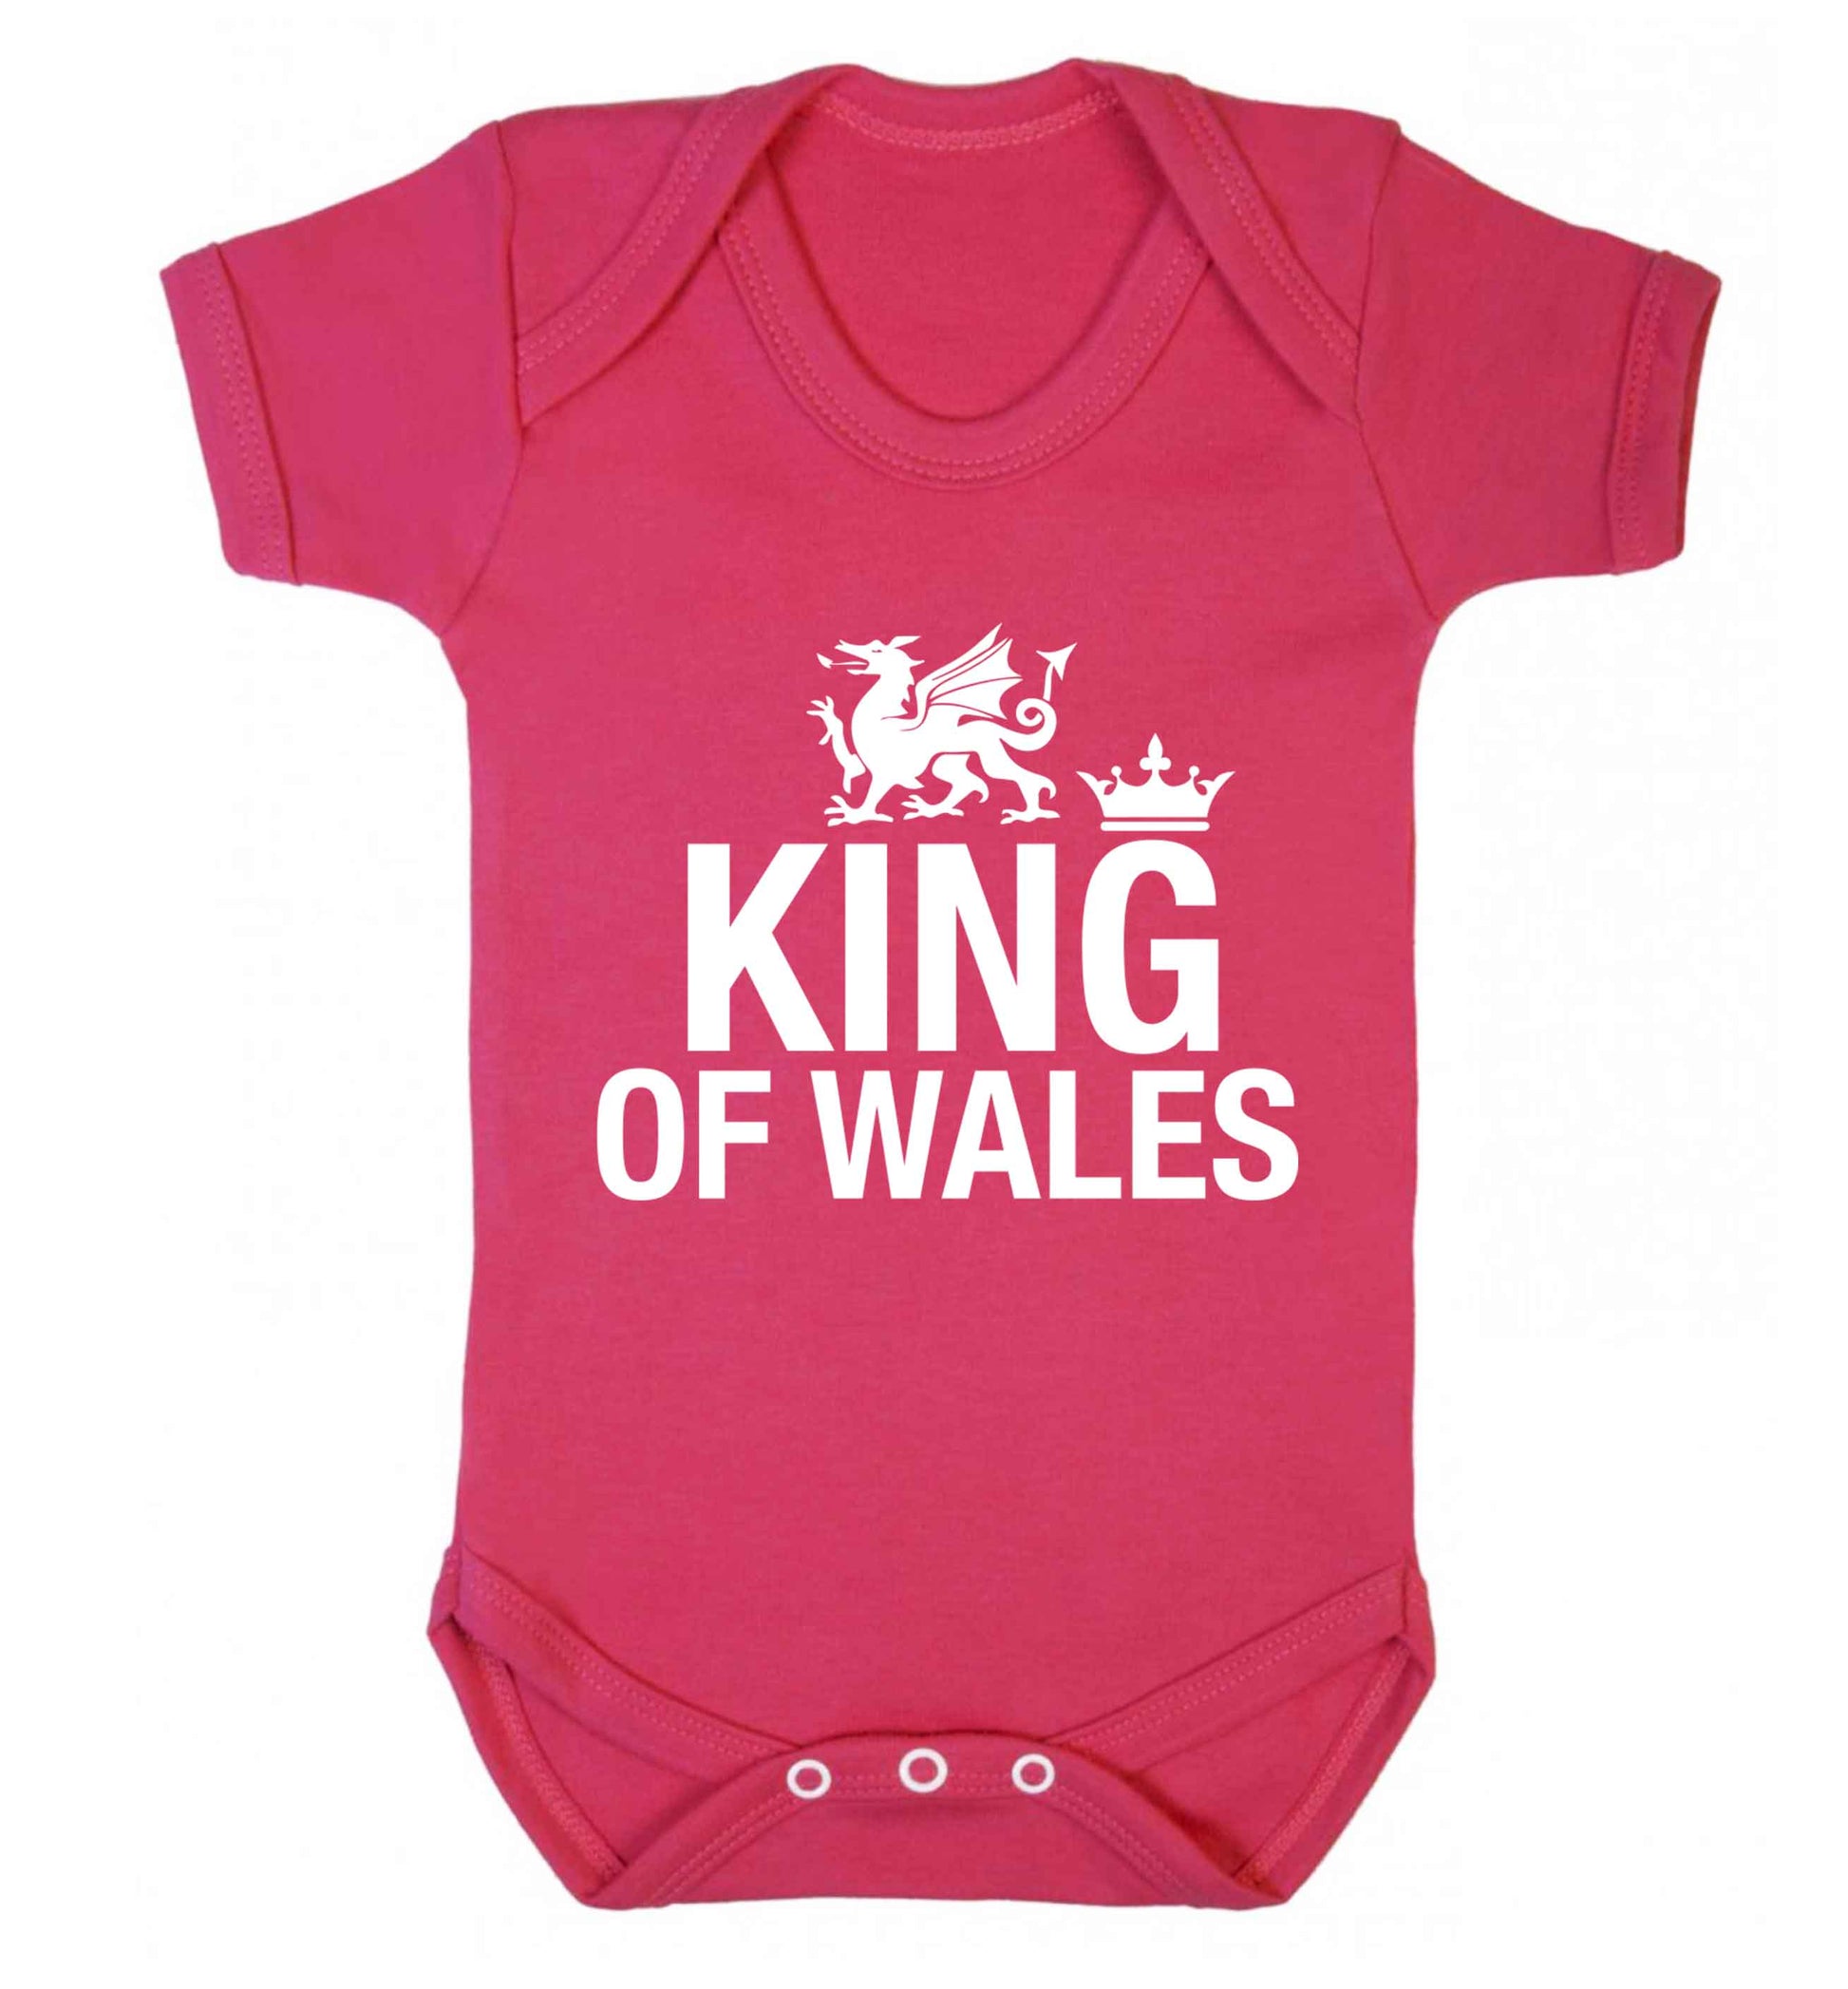 King of Wales Baby Vest dark pink 18-24 months